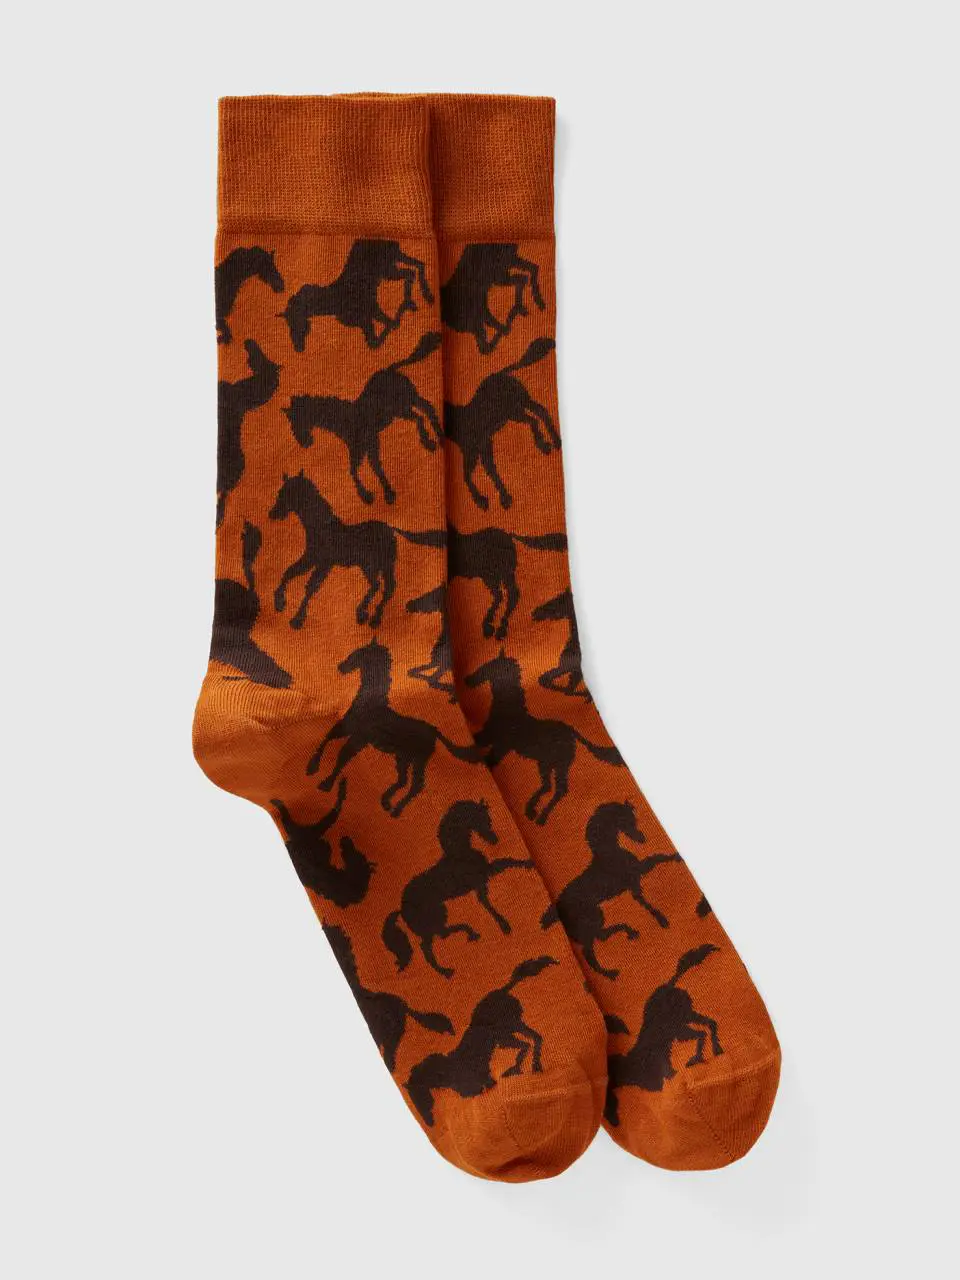 Benetton long camel socks with horses. 1